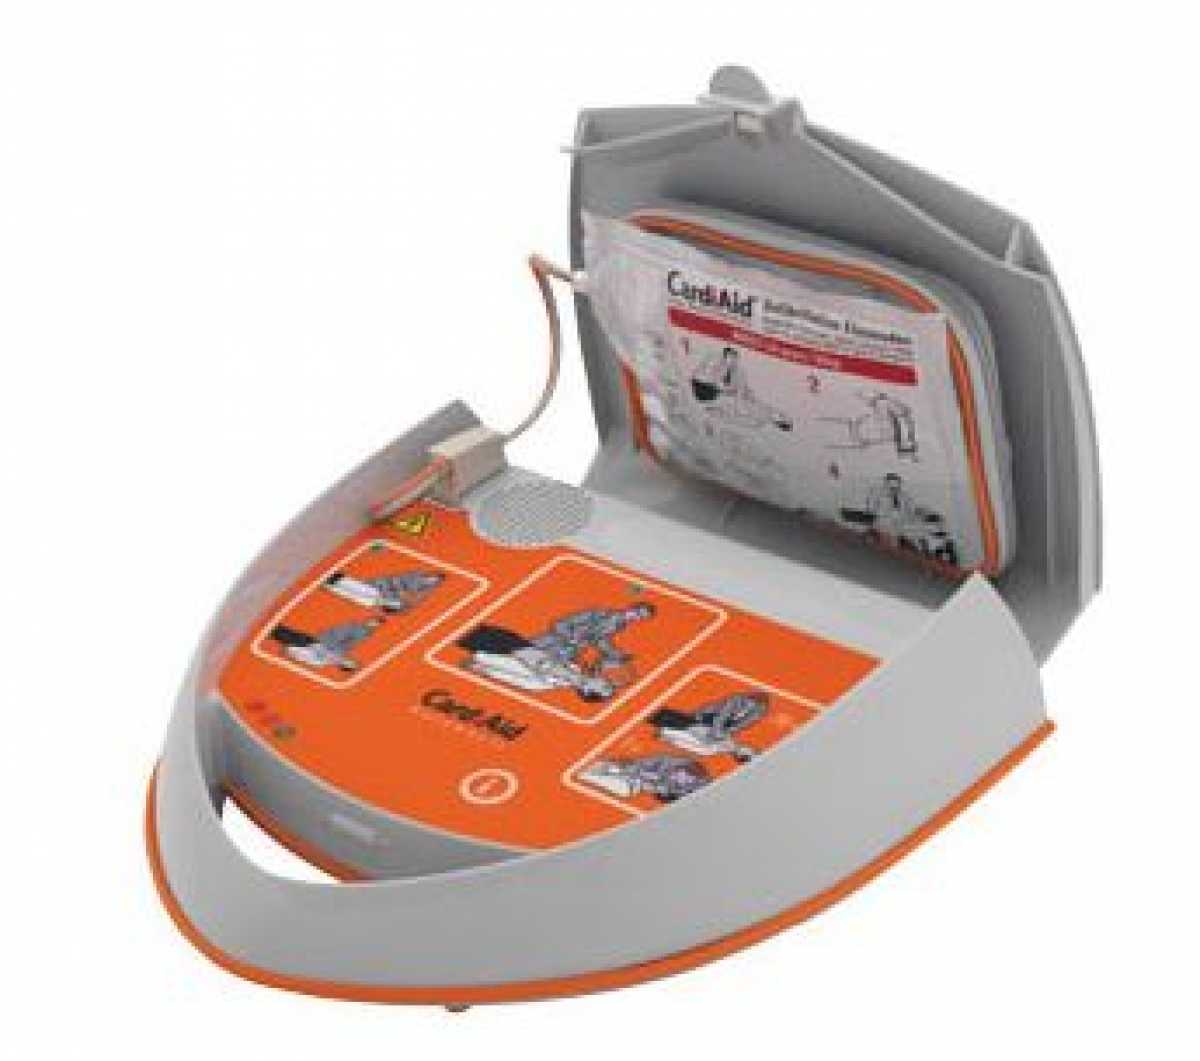 Full Automatic Defibrillator